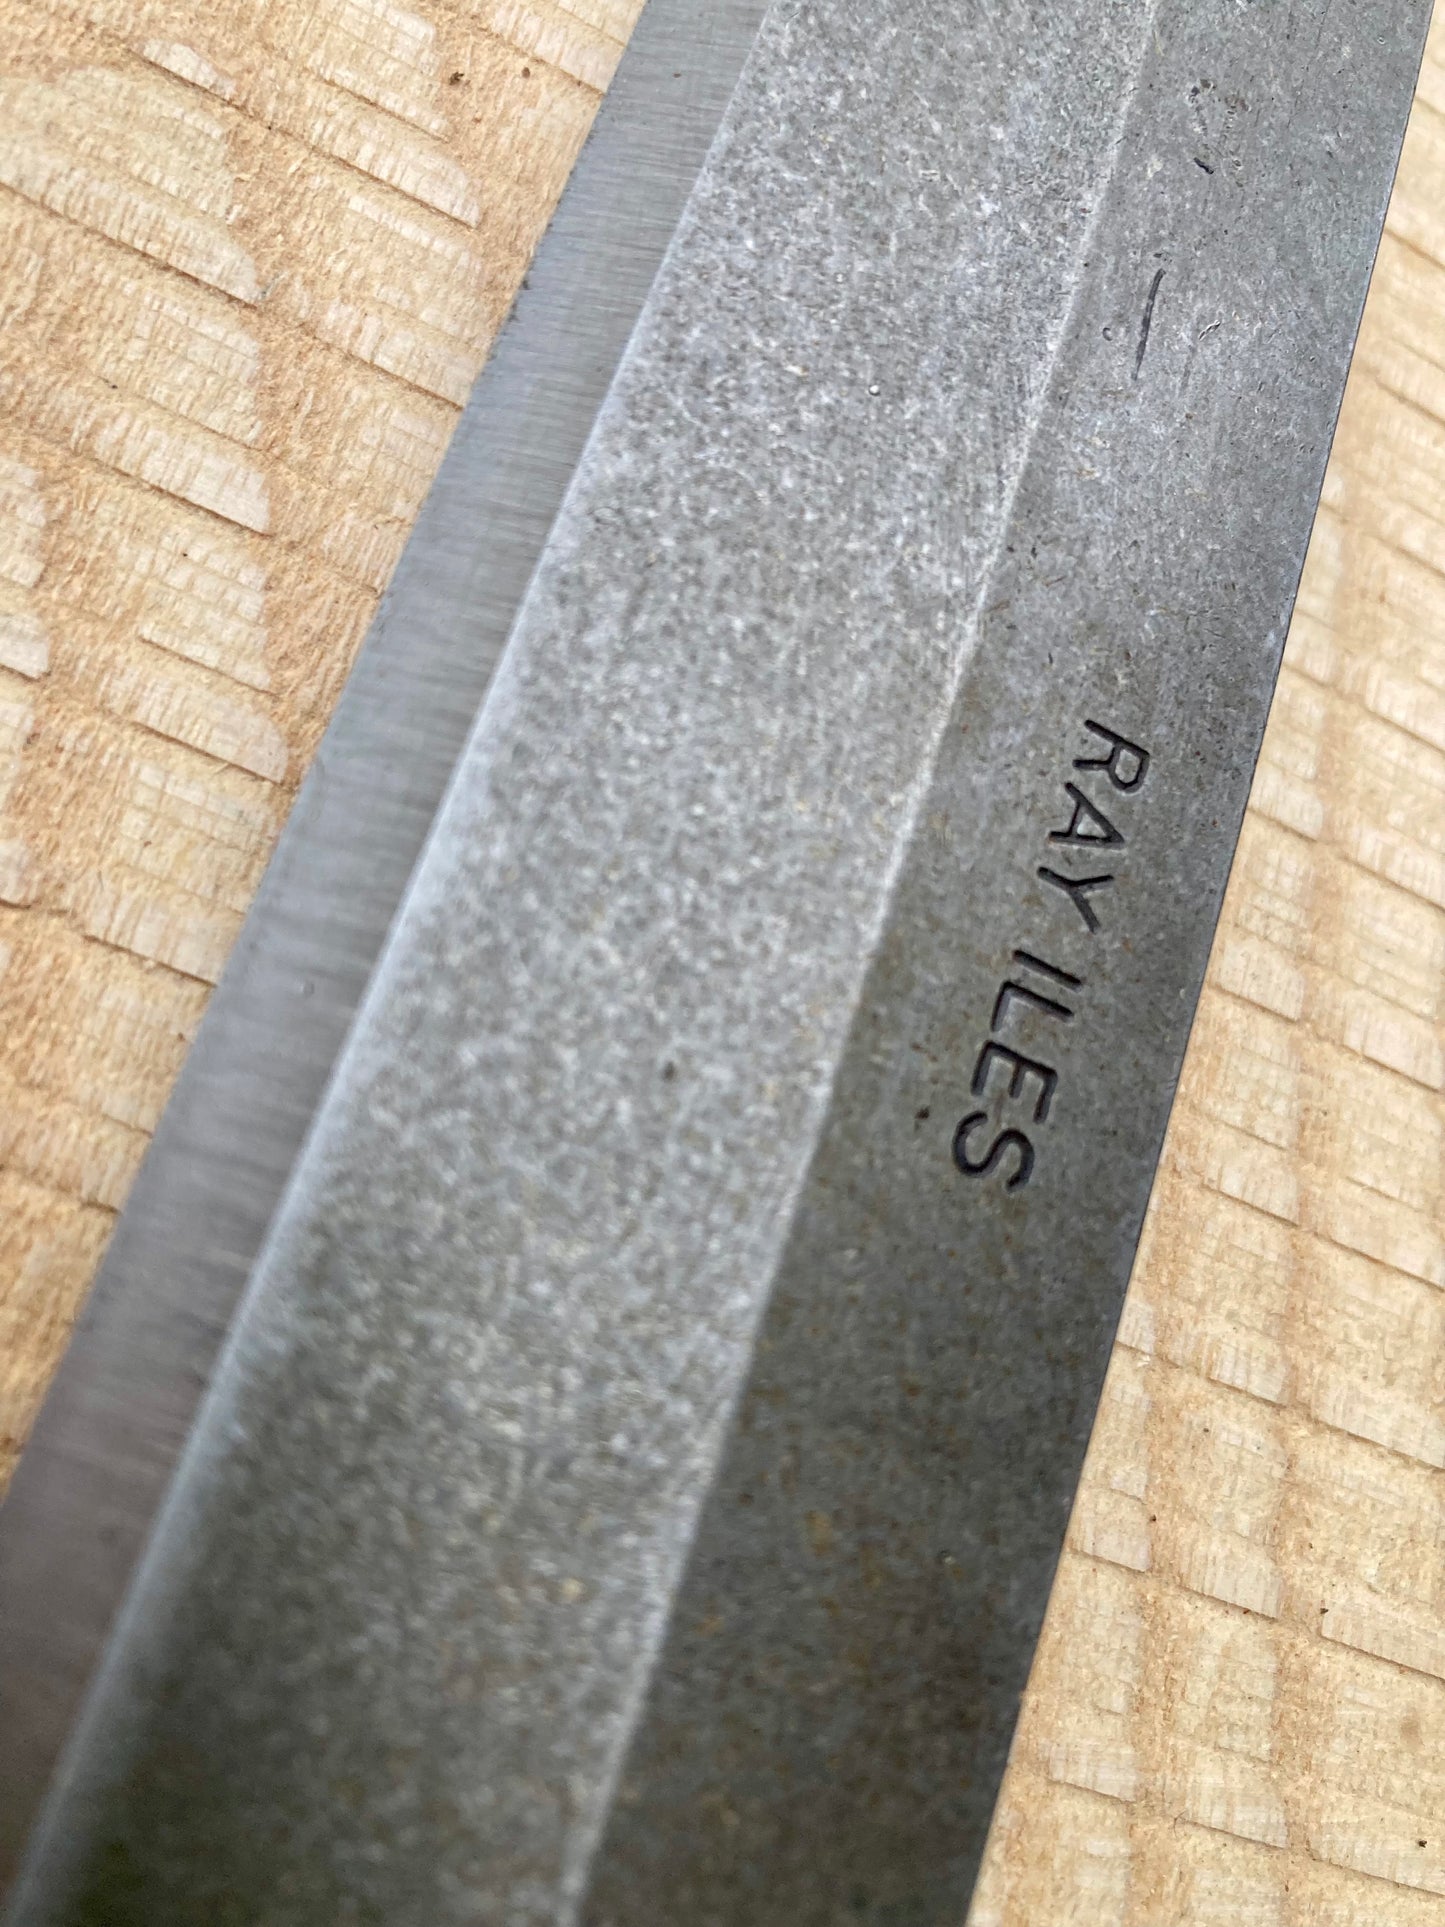 Ray Iles - Small Drawknife